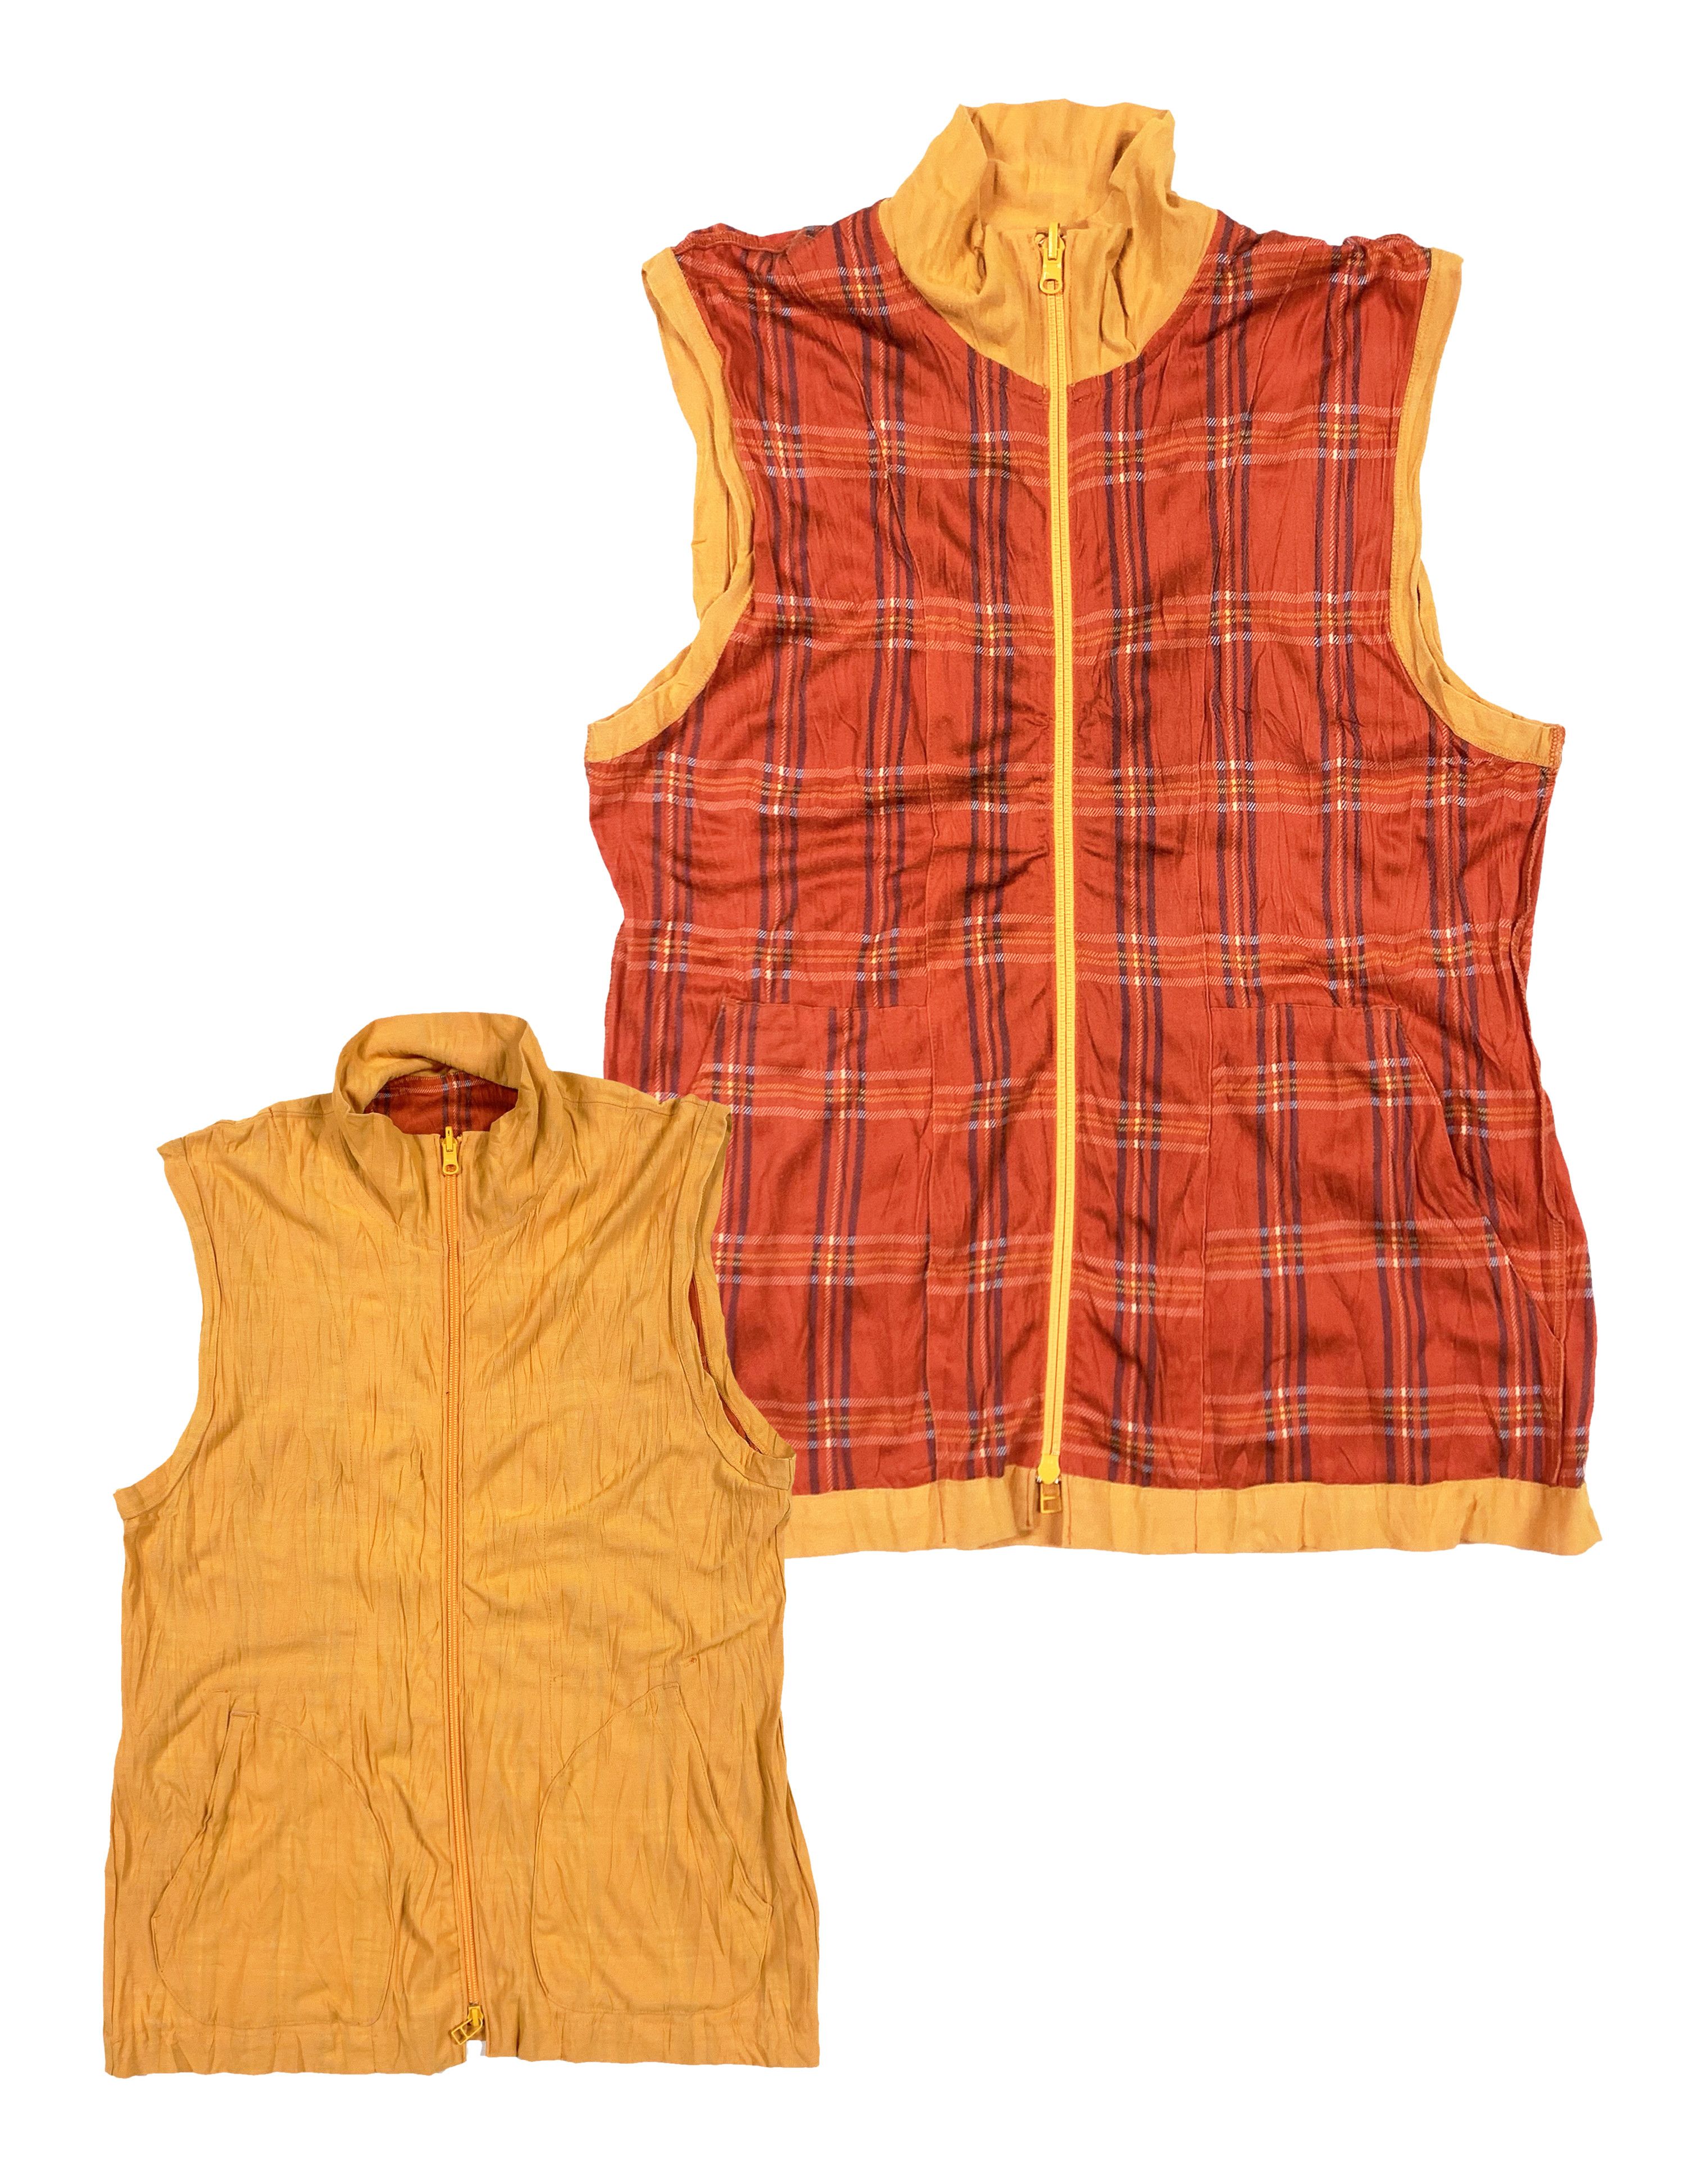 Issey Miyake 2001 Reversible Wrinkled / Textured Vest | Grailed